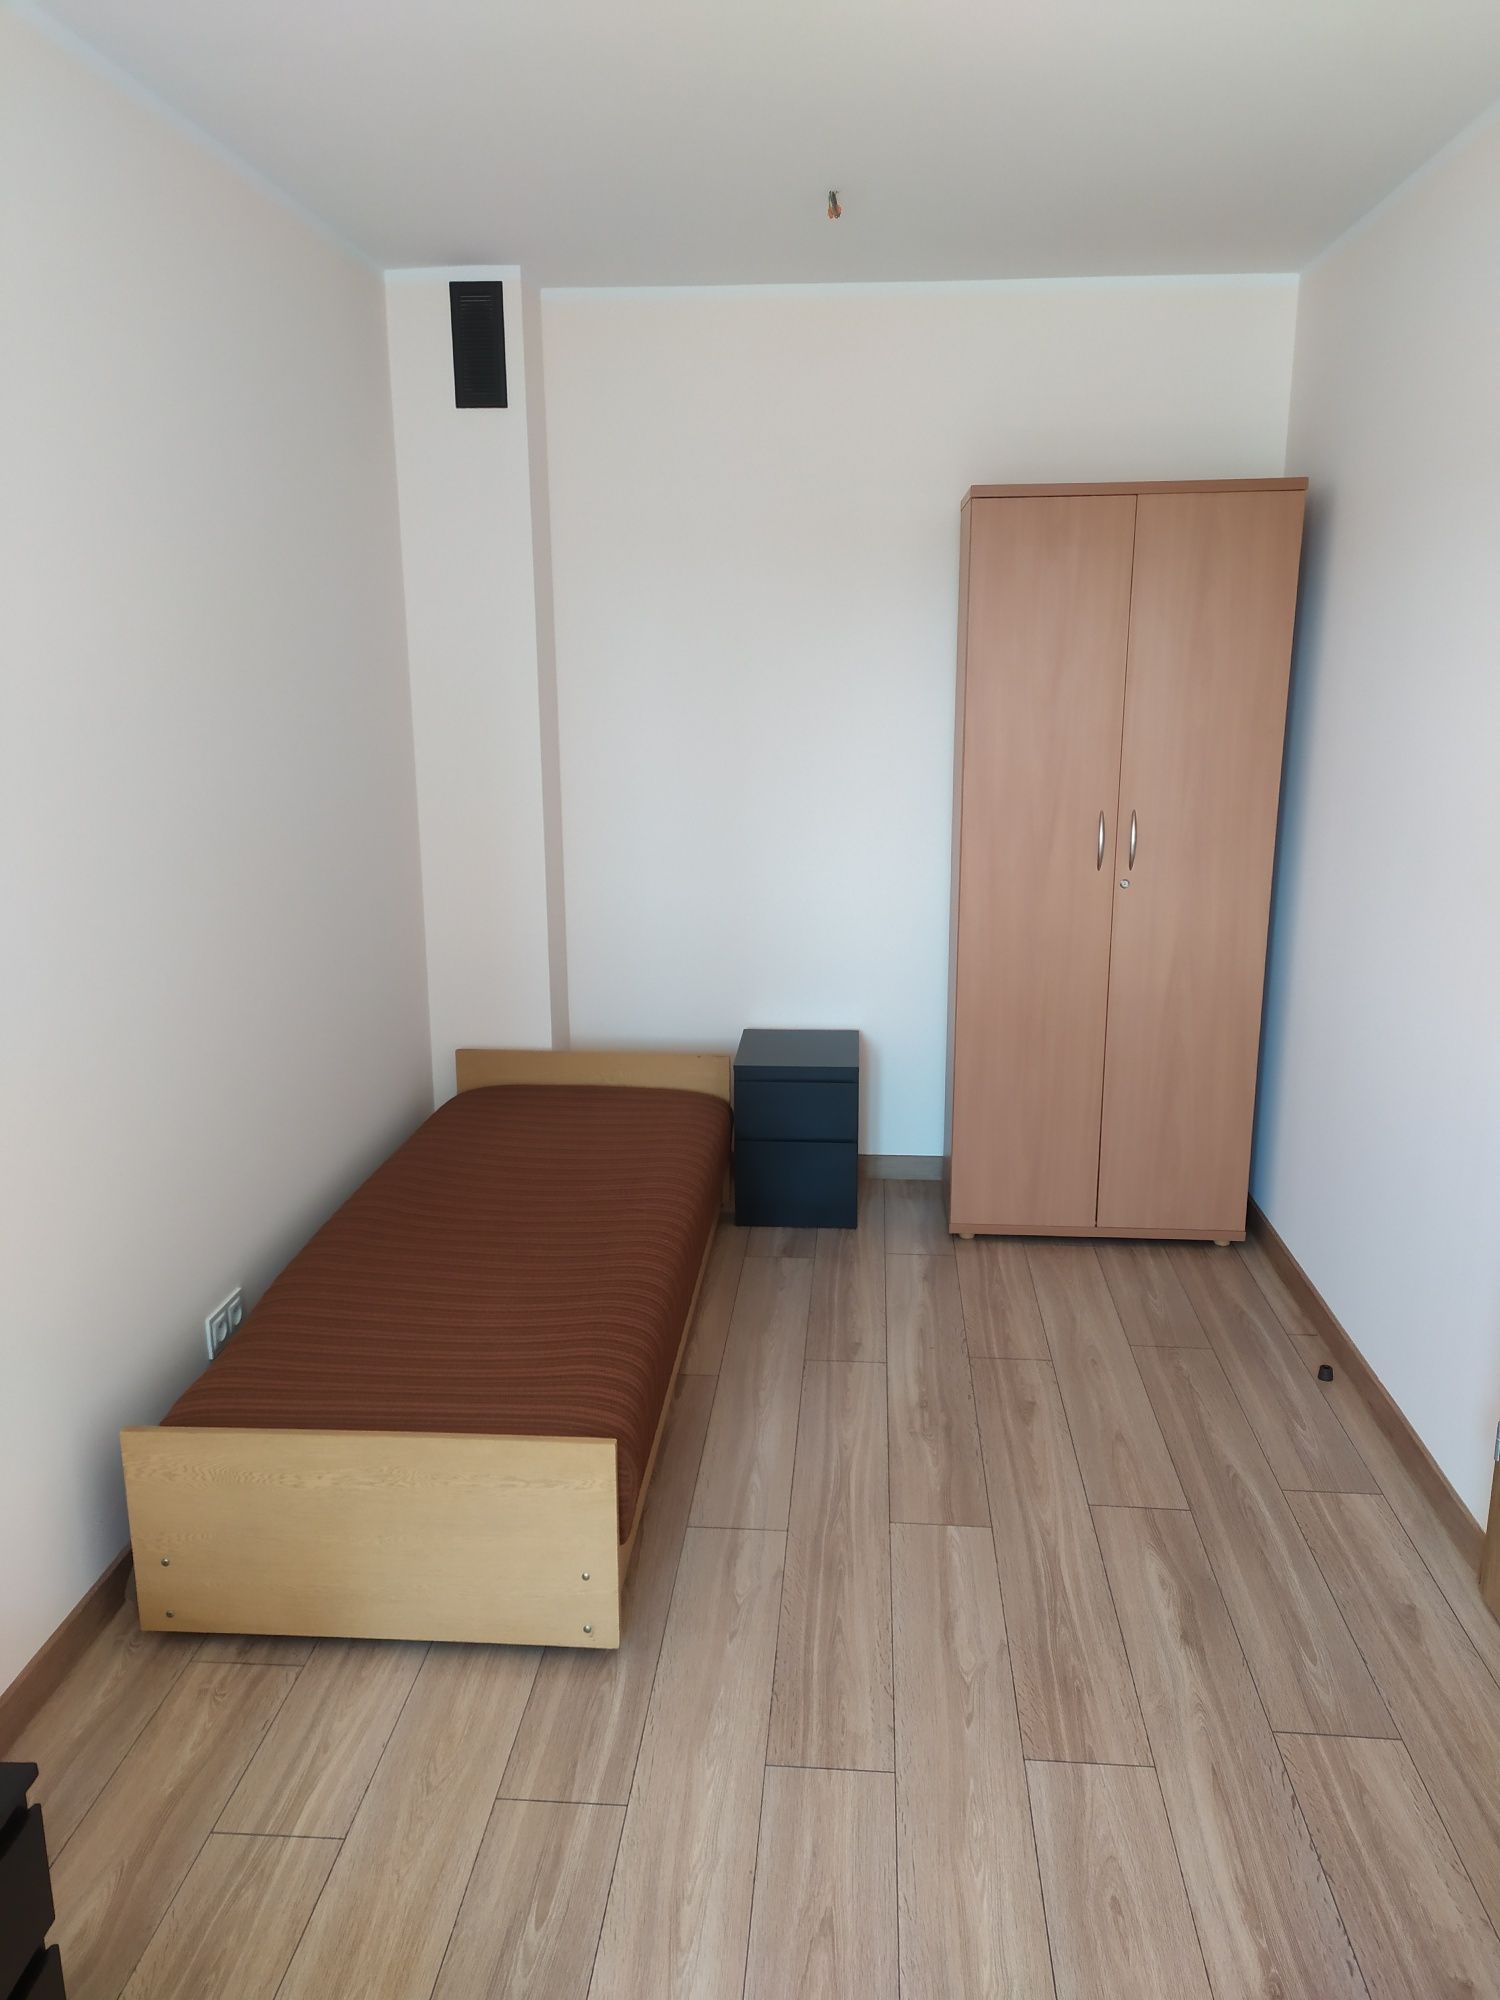 Квартира, комната, ночлег для беженцев из Украины